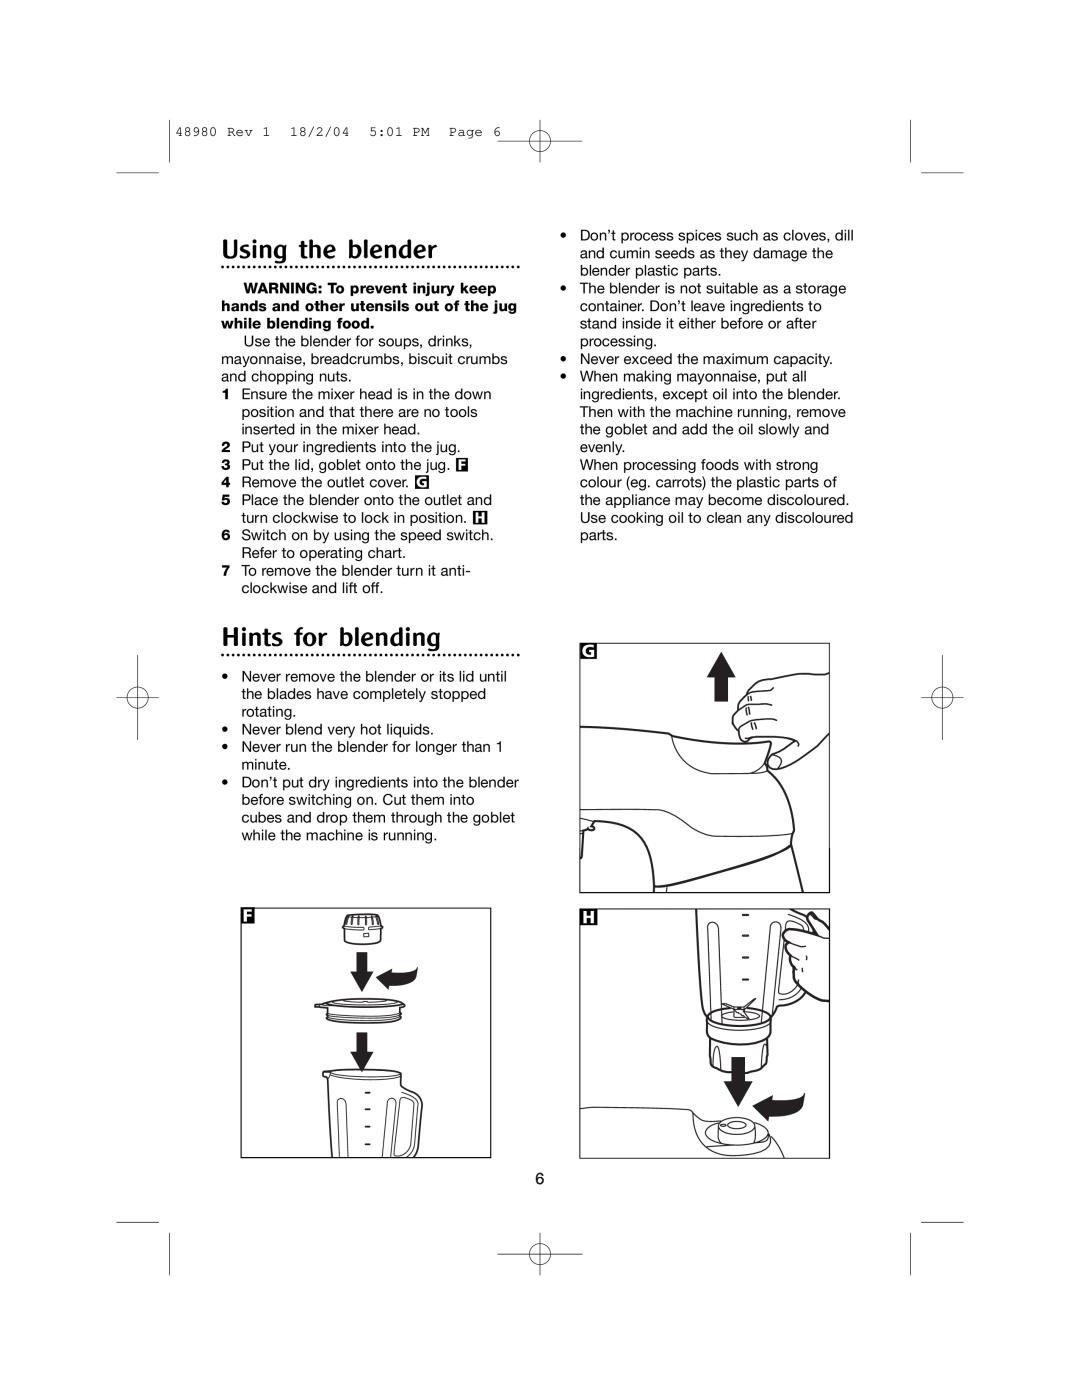 Morphy Richards Blender manual Using the blender, Hints for blending 